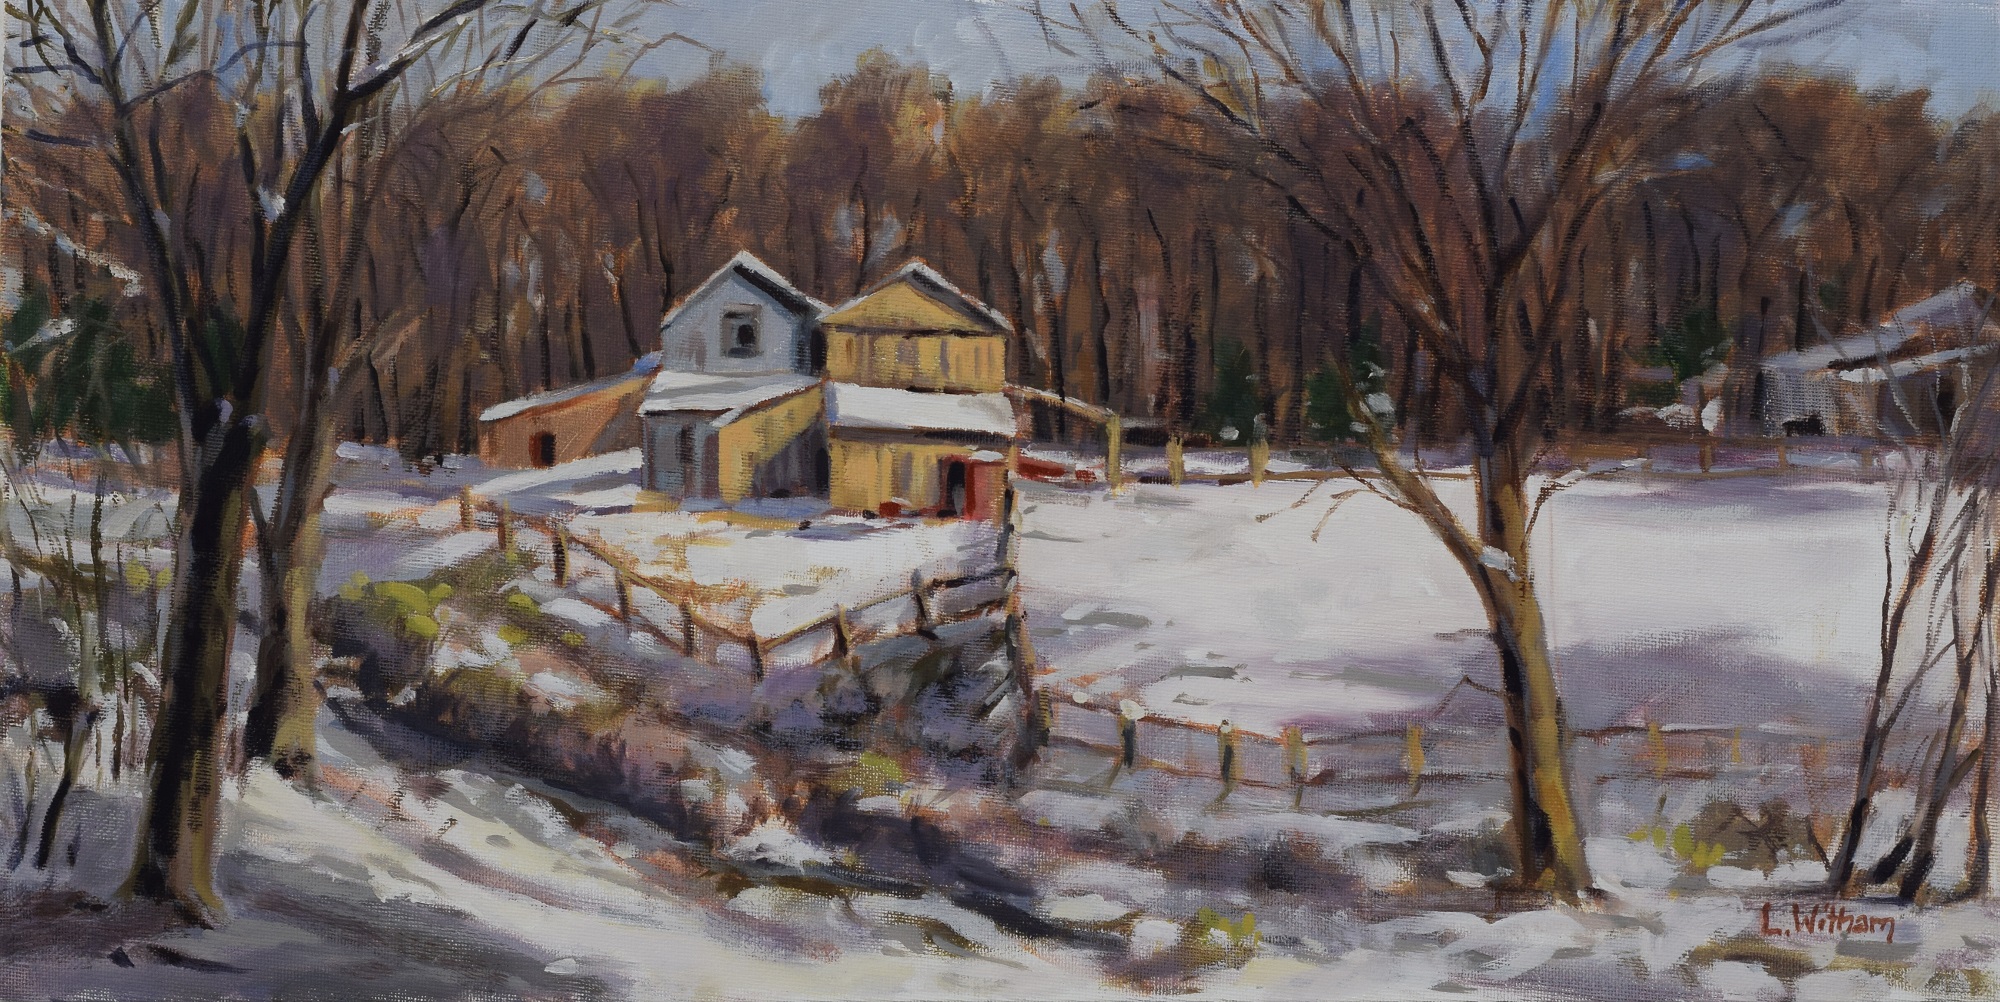 Snowscape, Oil on canvas, 10x20